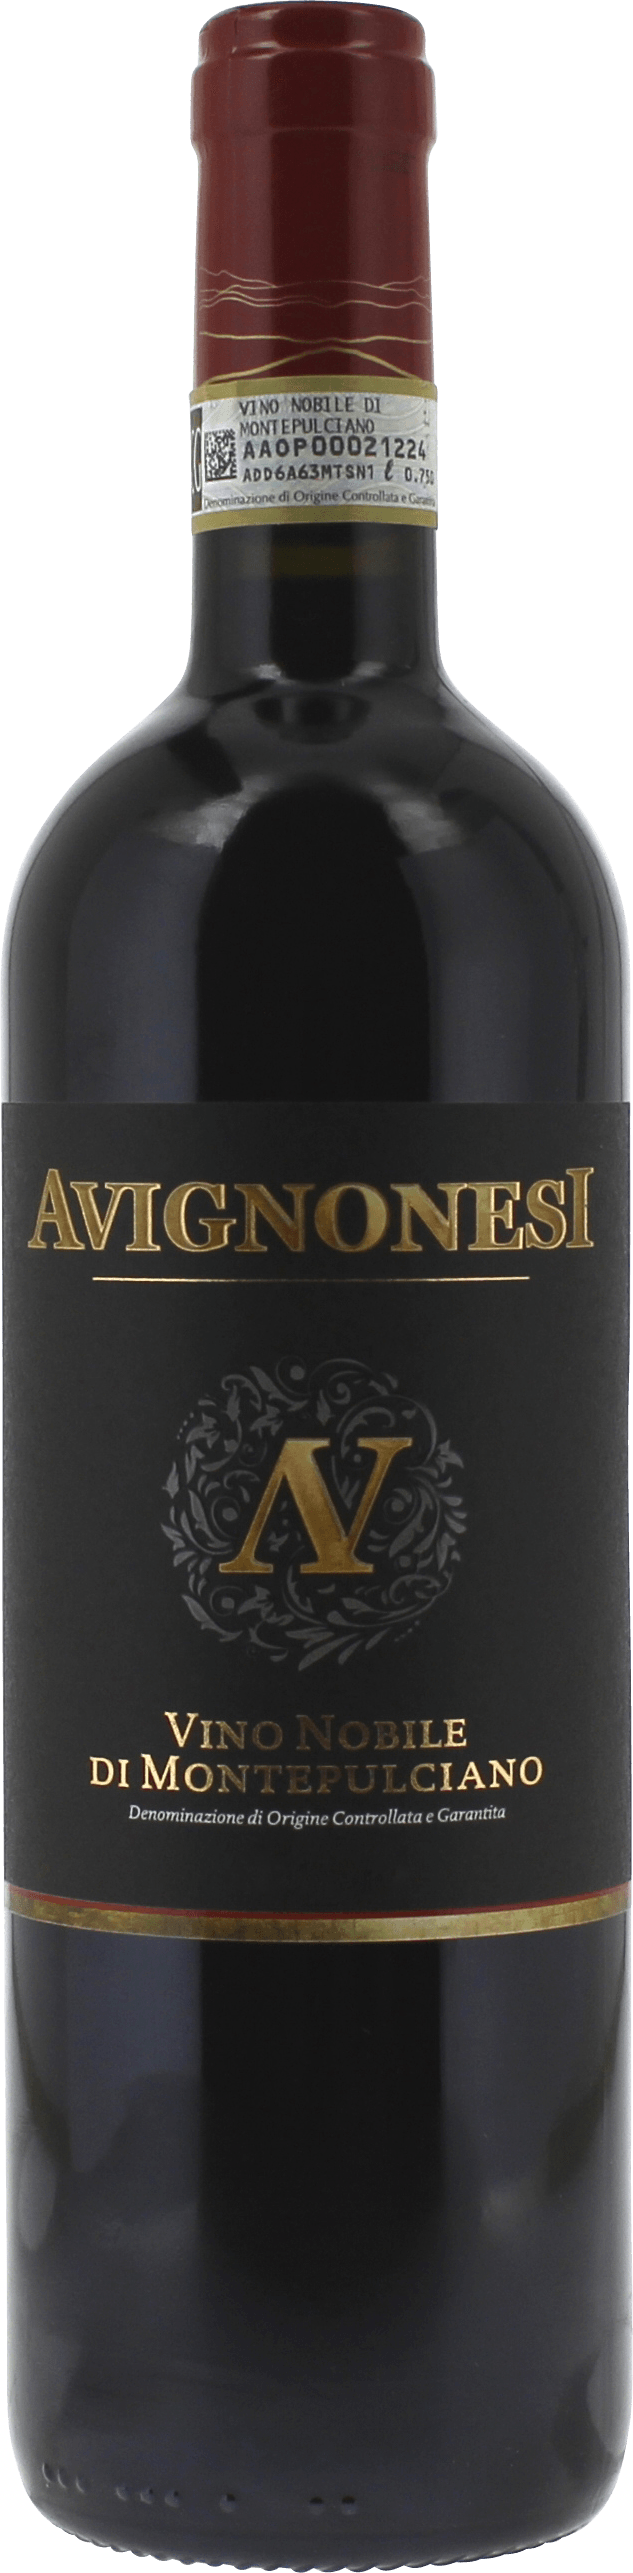 Avignonesi -  prugnolo gentile -vino nobile di montepulciano 2012  , Vin italien